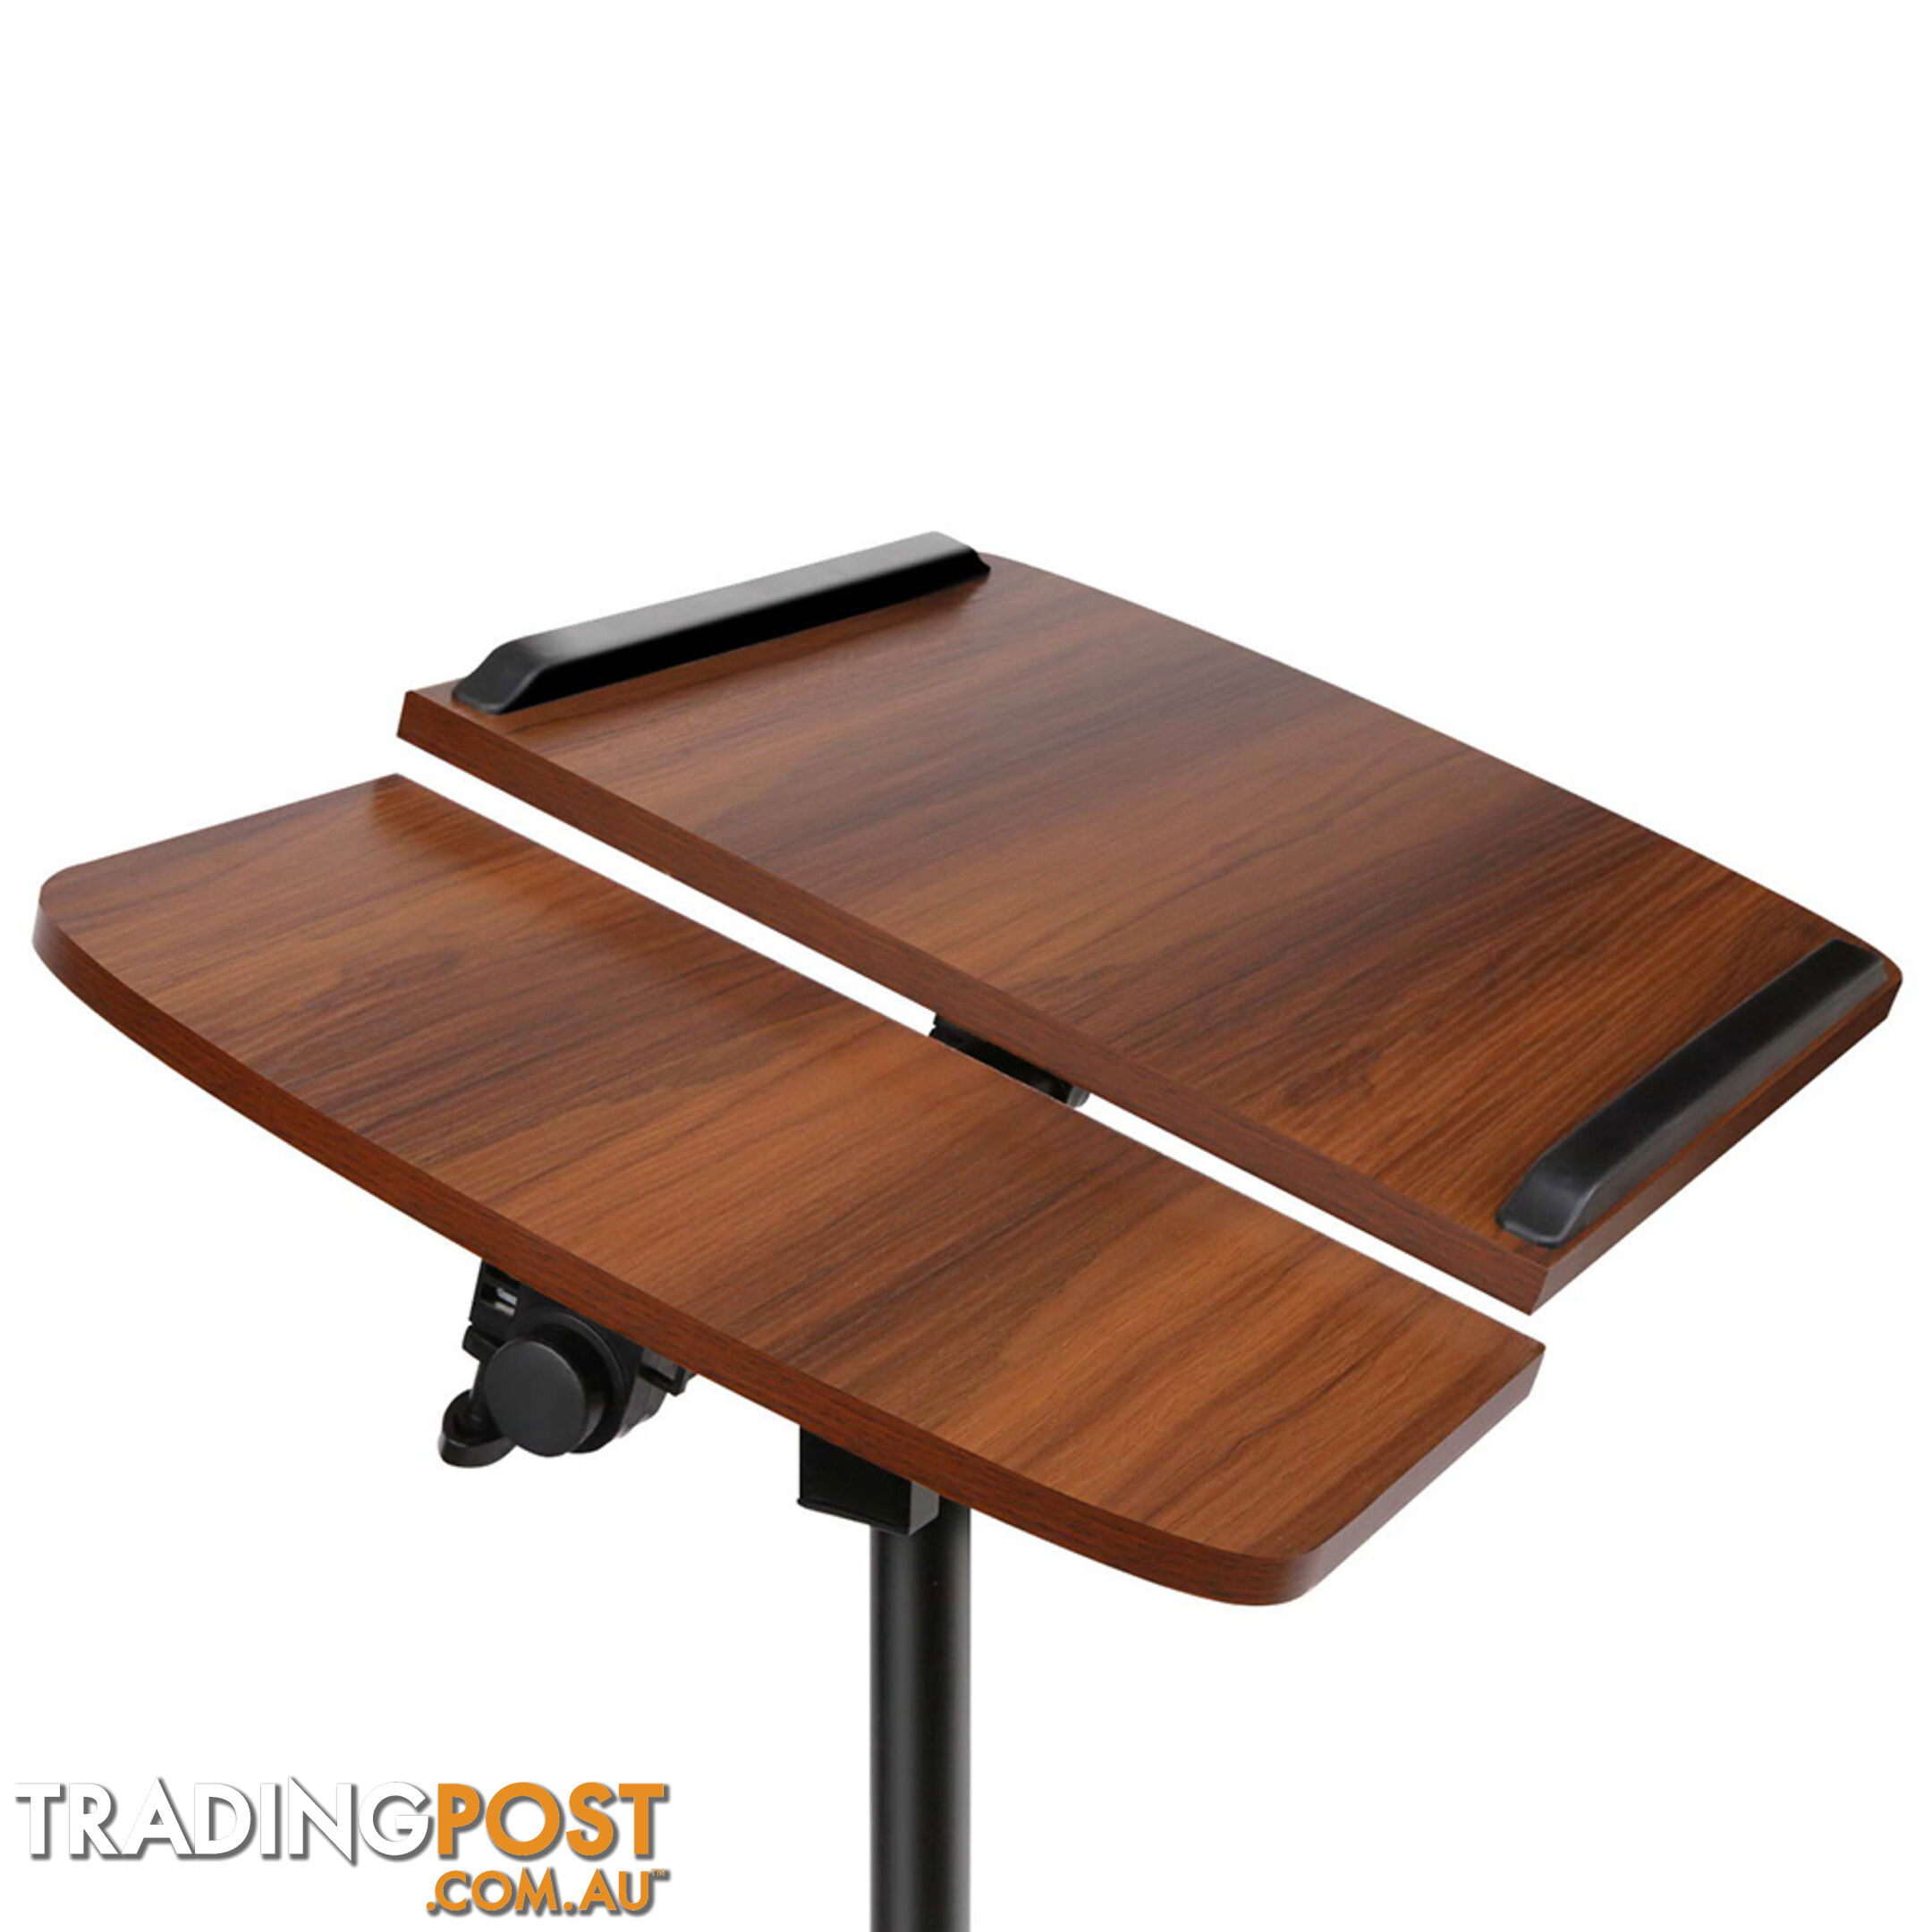 Portable Laptop Stand Adjustable Computer Notebook iPad Bedside Table Desk